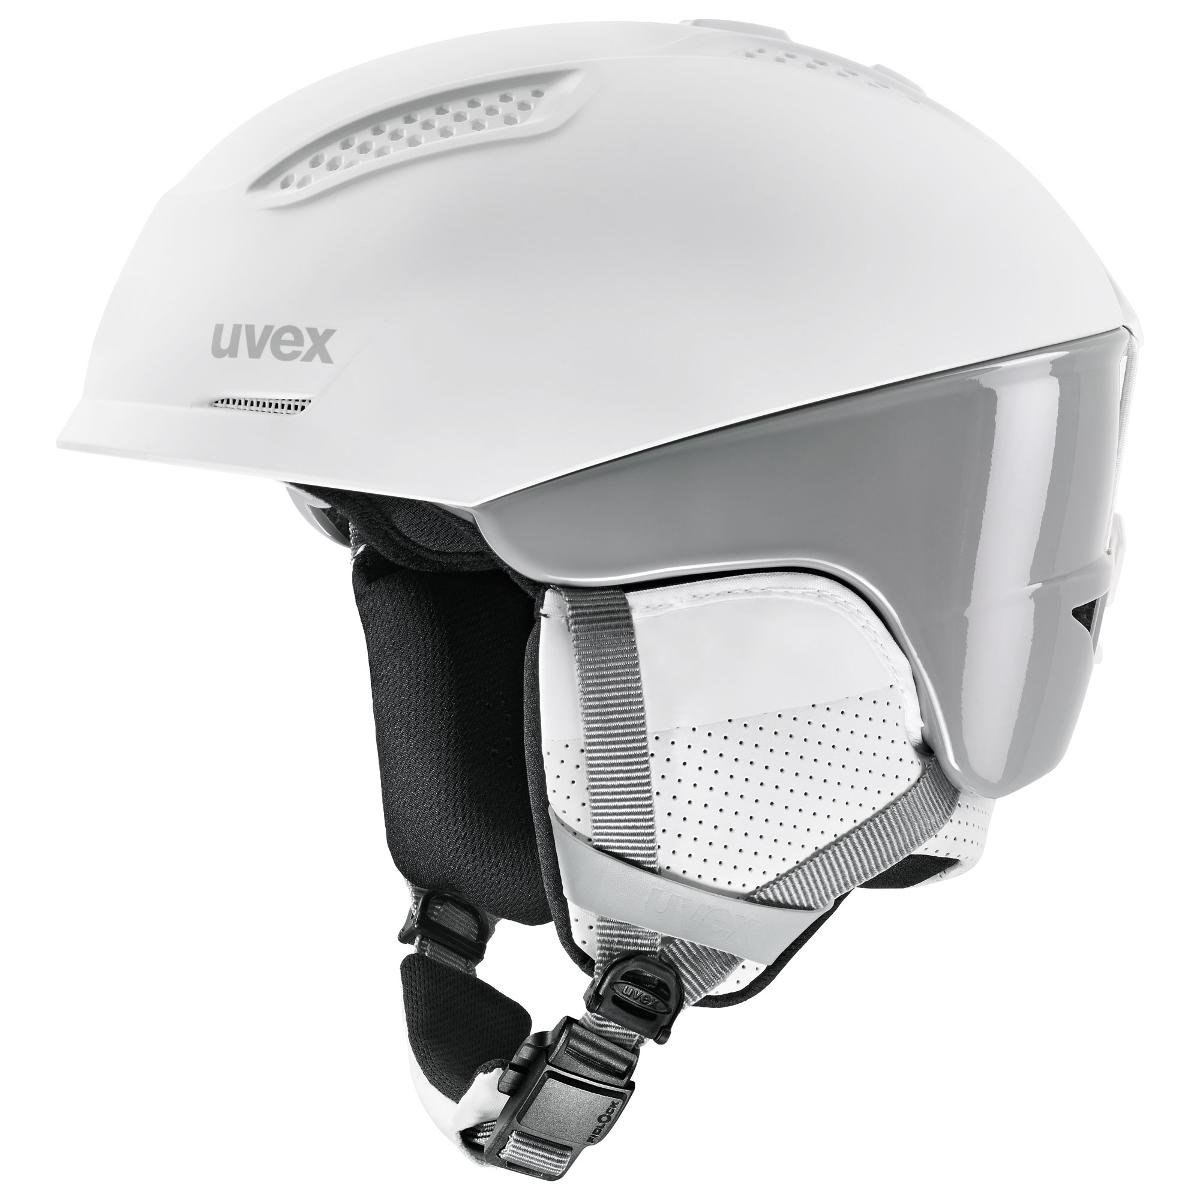 Uvex Kask narciarski Ultra Pro white/grey mat (05) 56/6/249/10/05